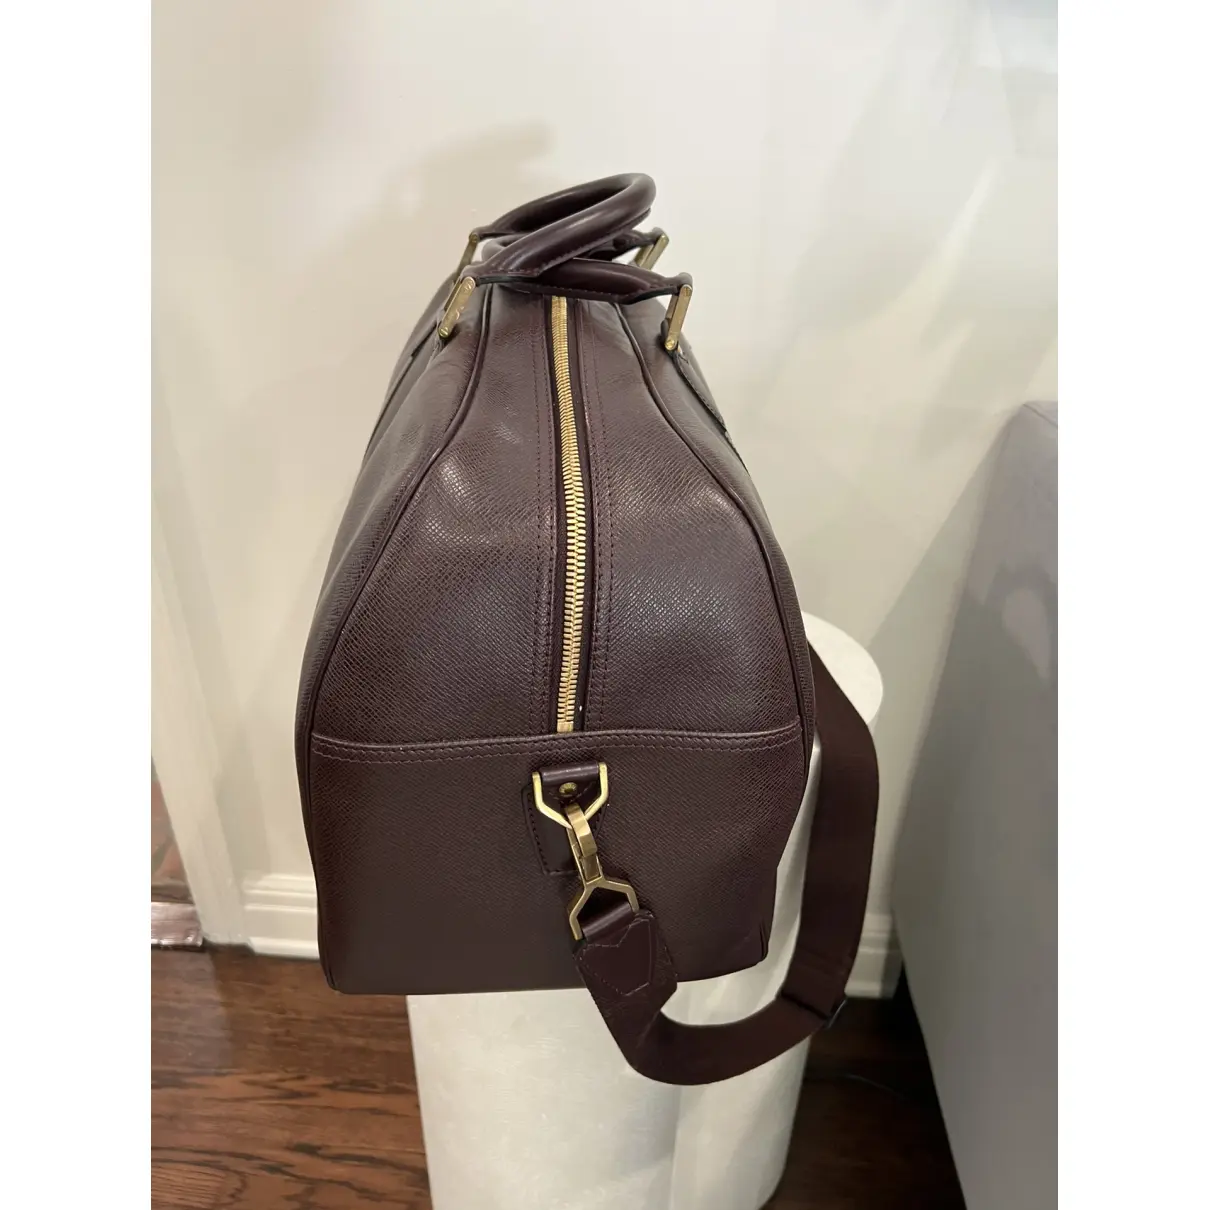 Buy Louis Vuitton Leather travel bag online